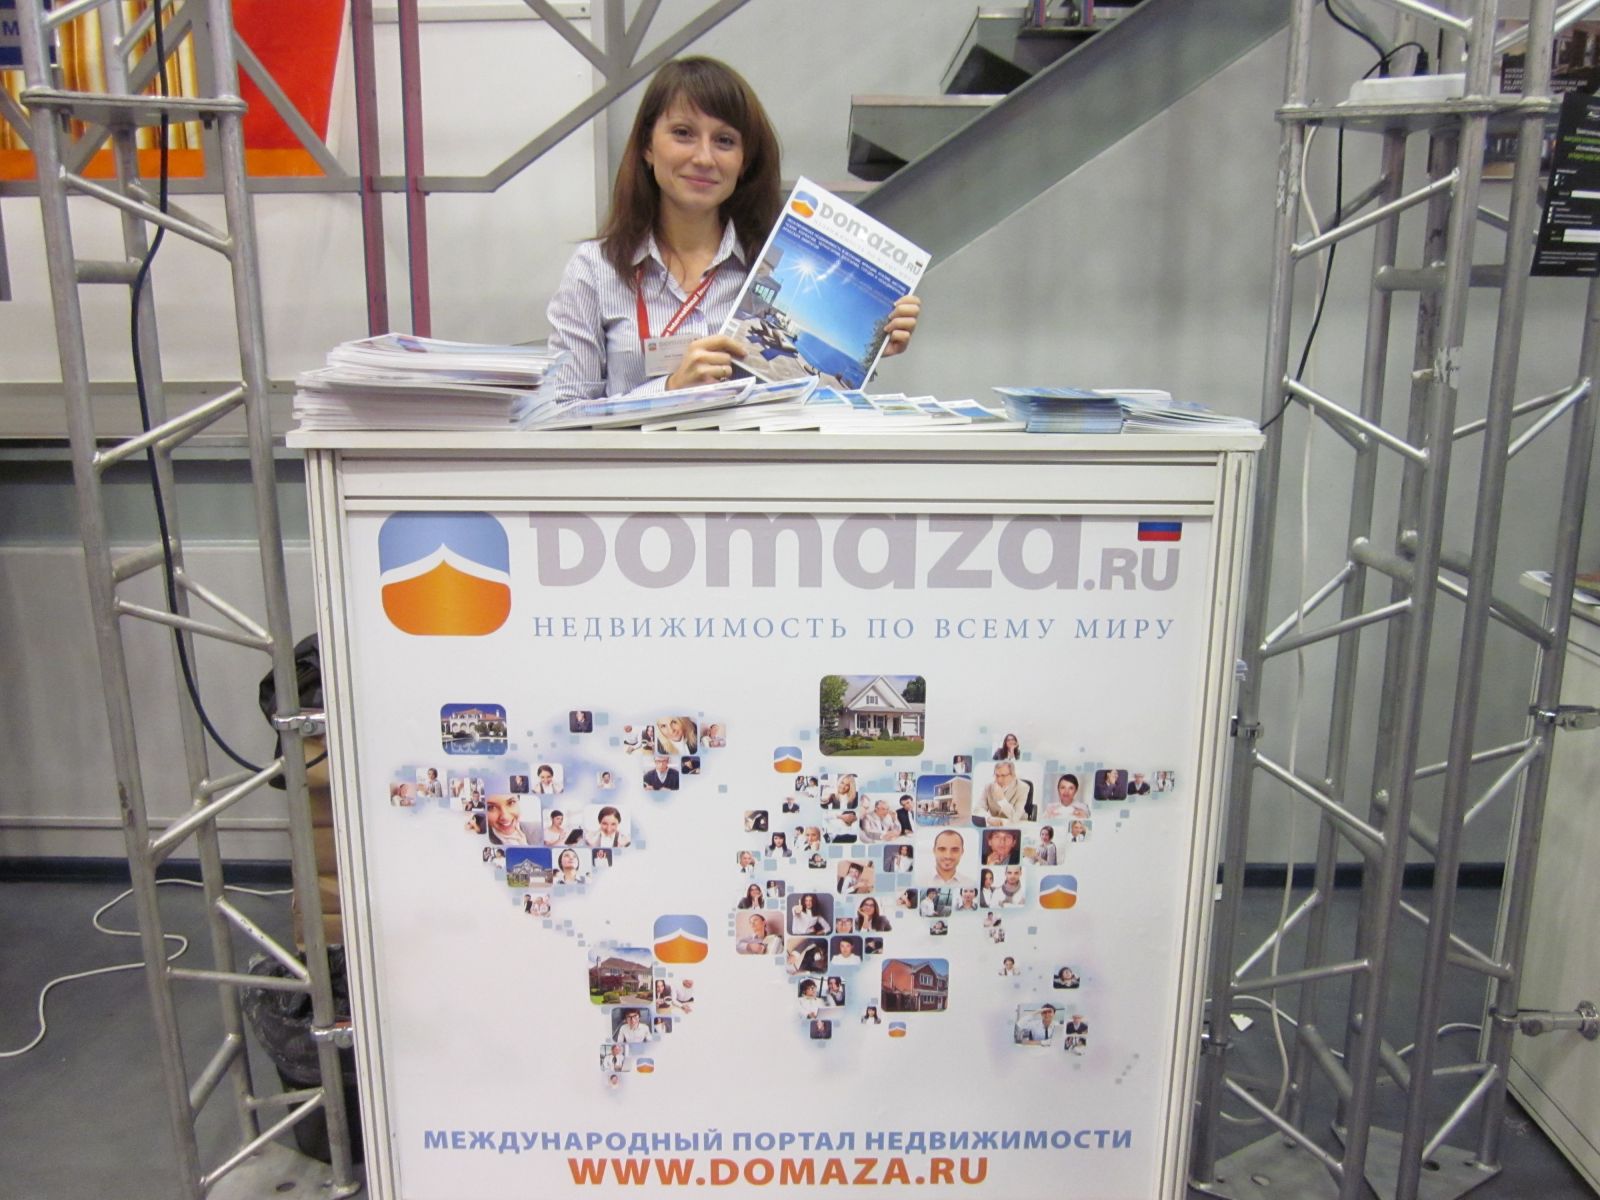 Domaza.ru participó en la feria Moscow Overseas Property & Investment Show